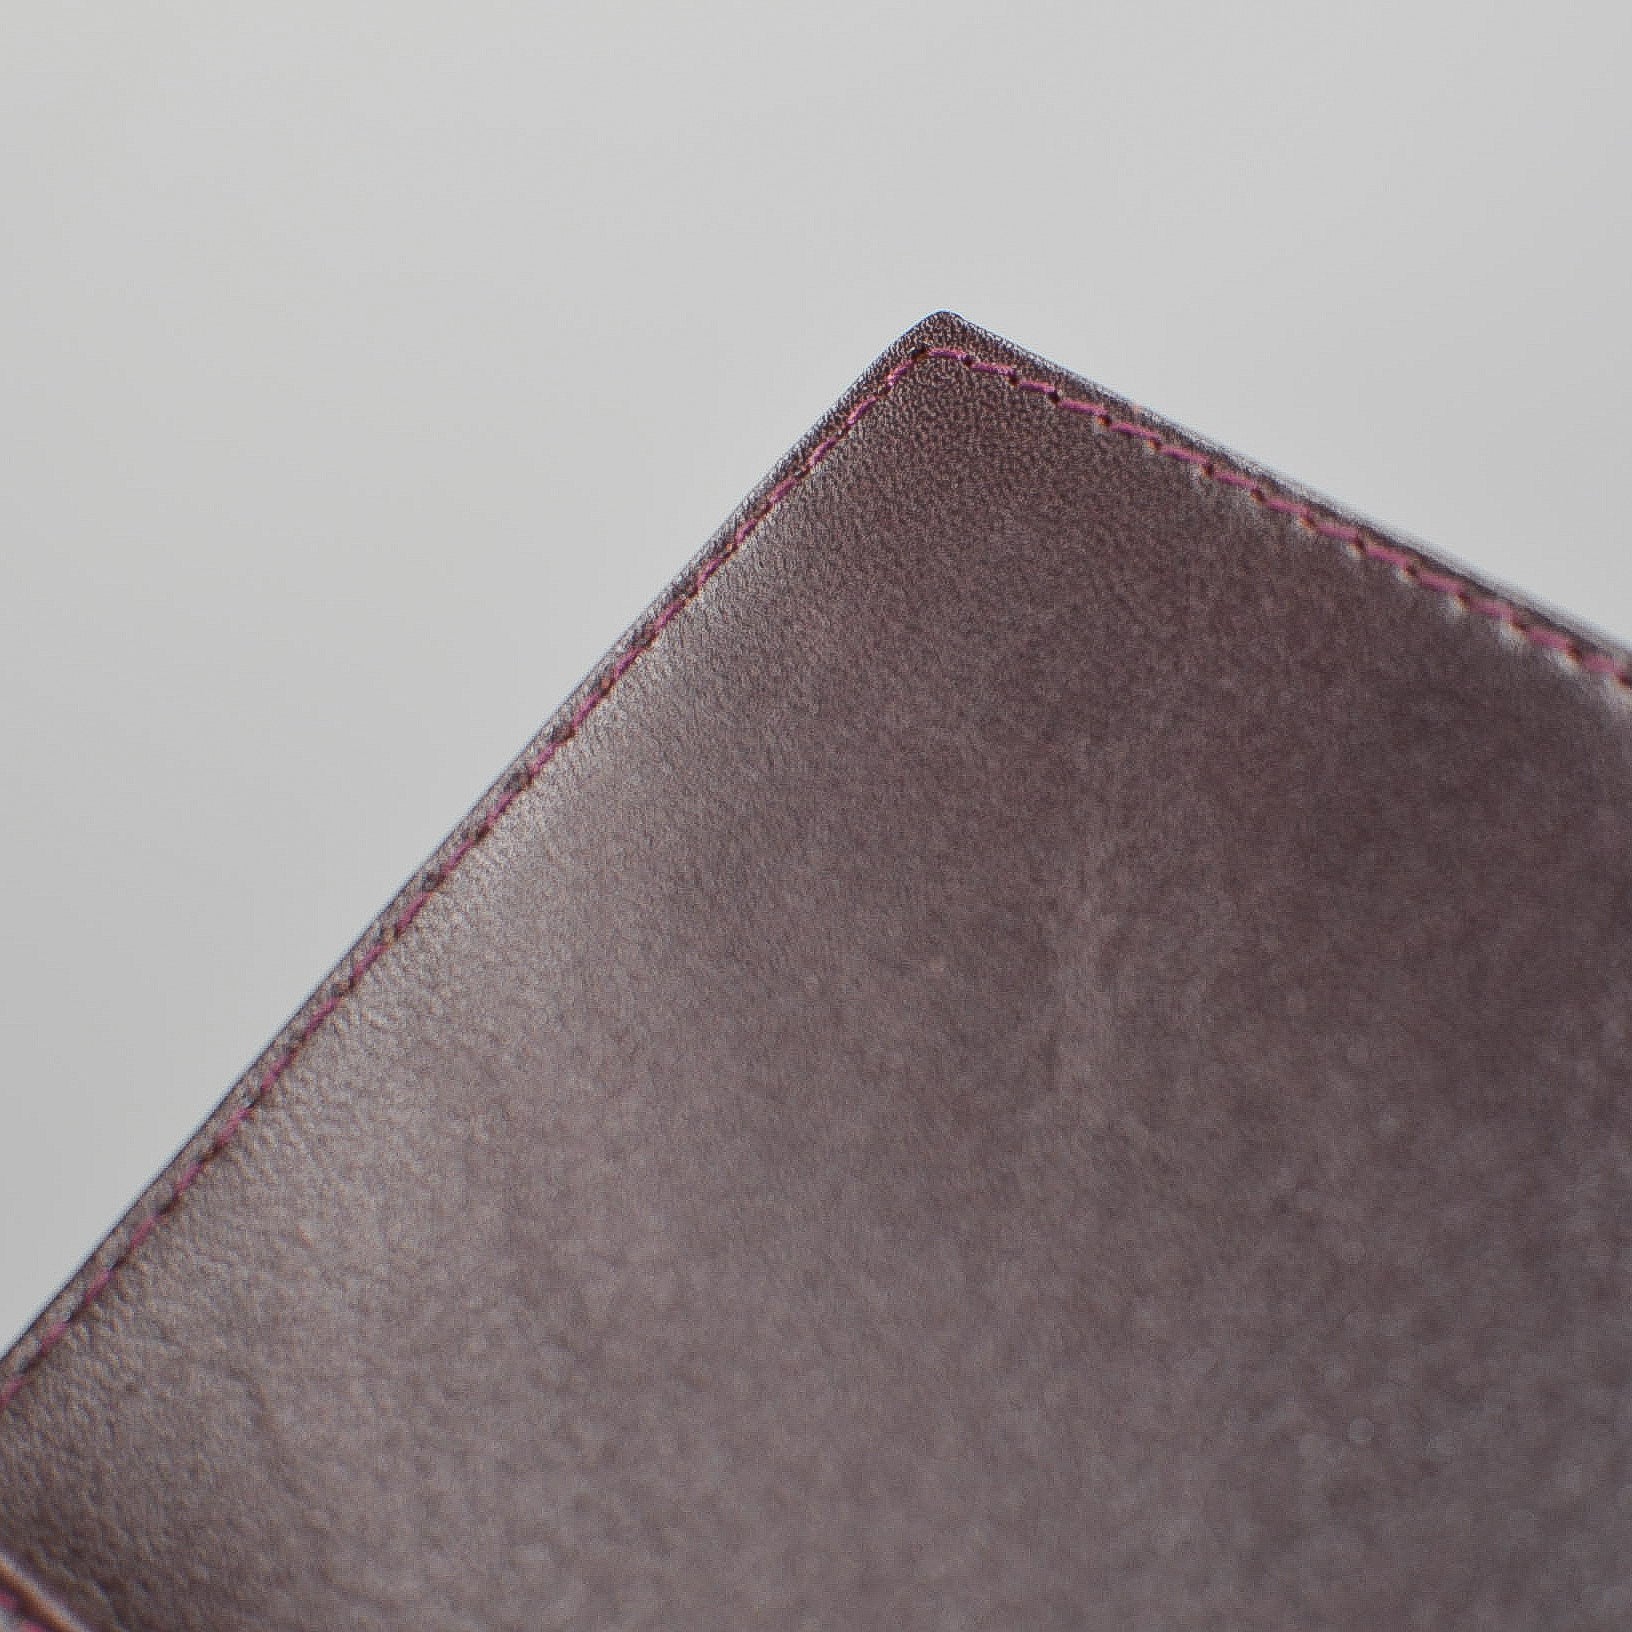 Leather Cover: 391 6 3/4" x 3 3/4" for 3-1/4x6-1/4 wirebound or casebound insert burgundy